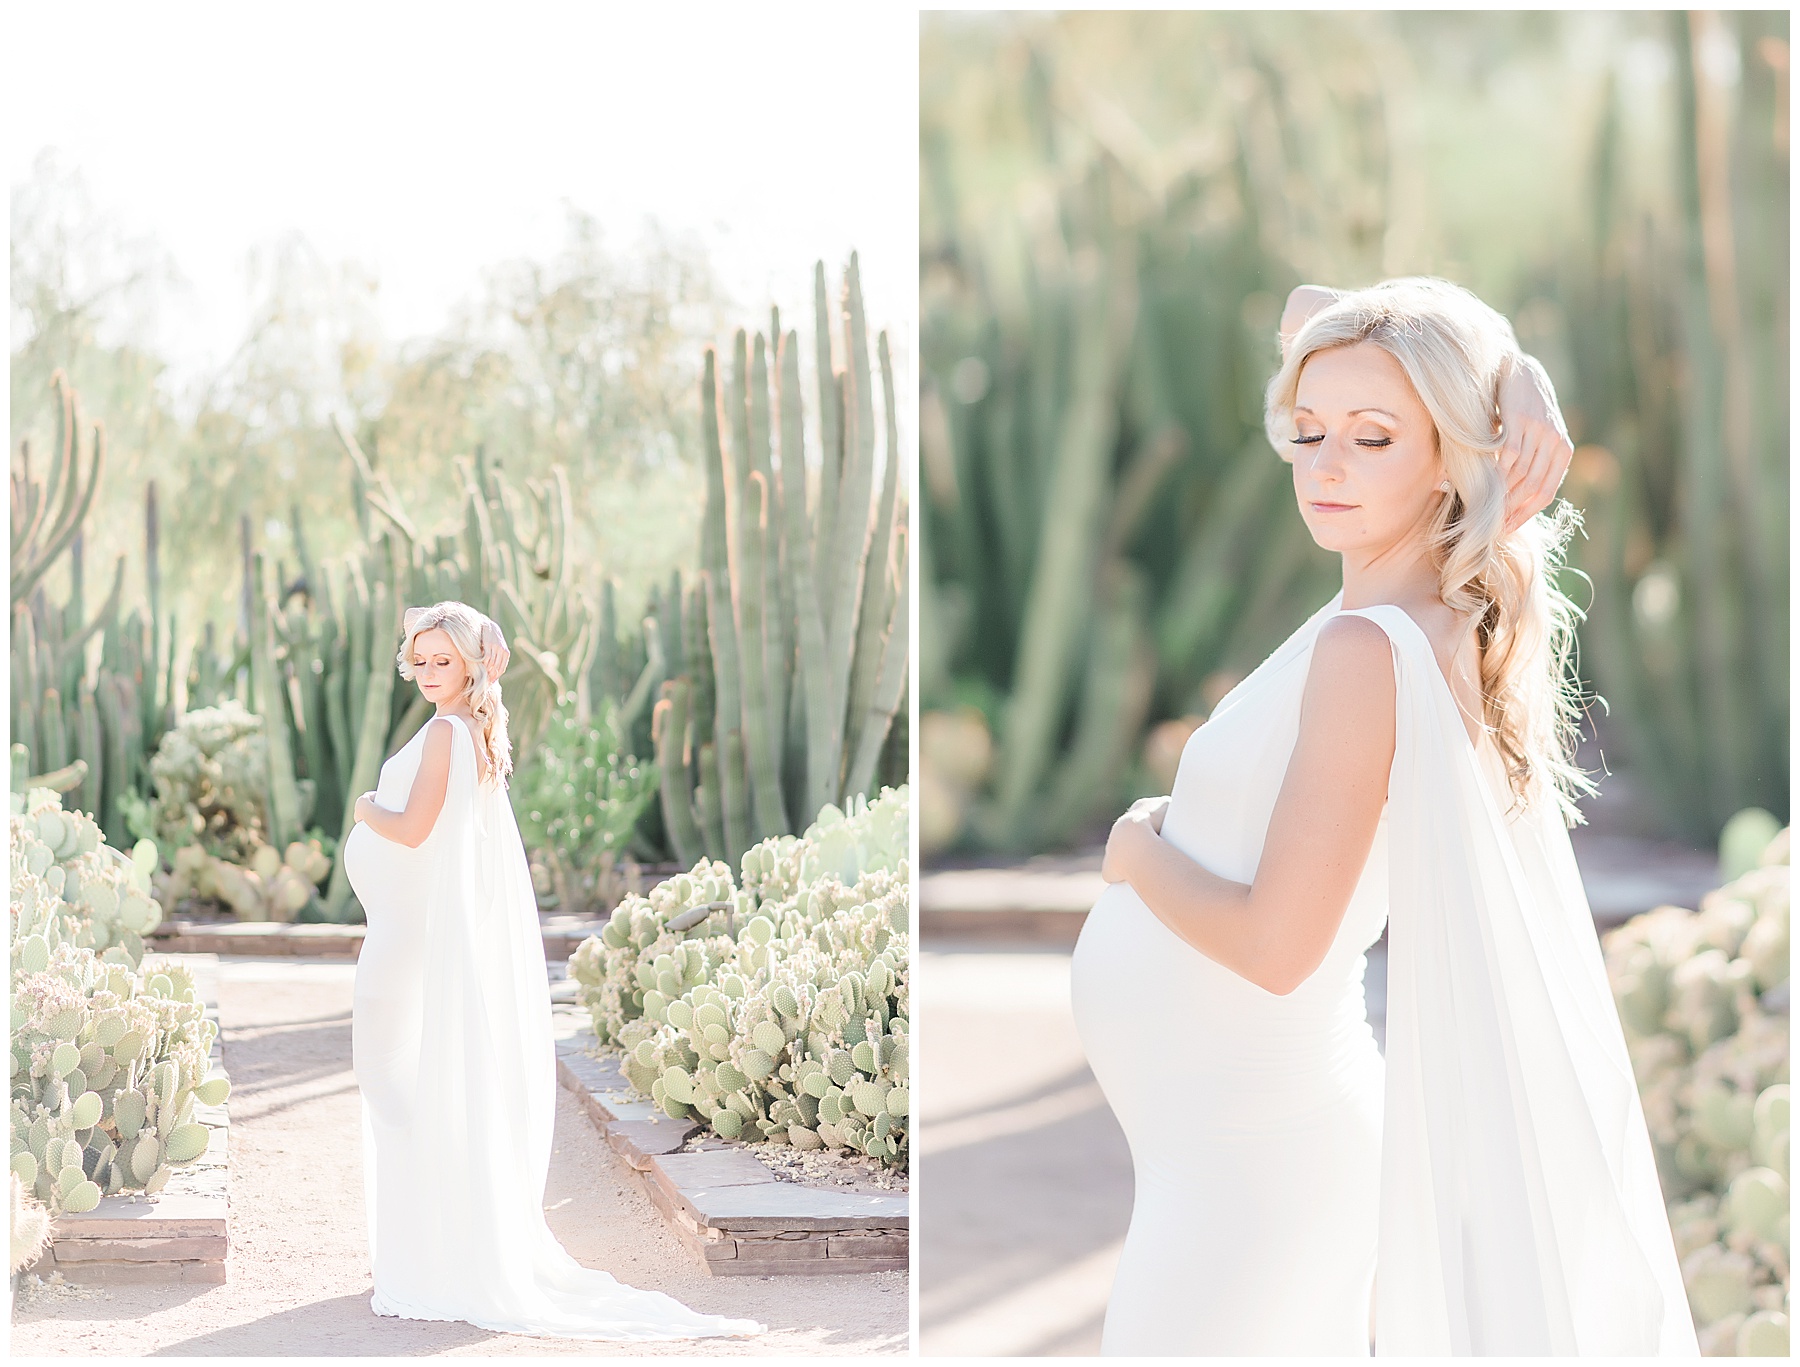 Dorota's-Maternity-Session-Phoenix-Arizona-Ashley-Flug-Photography03.jpg